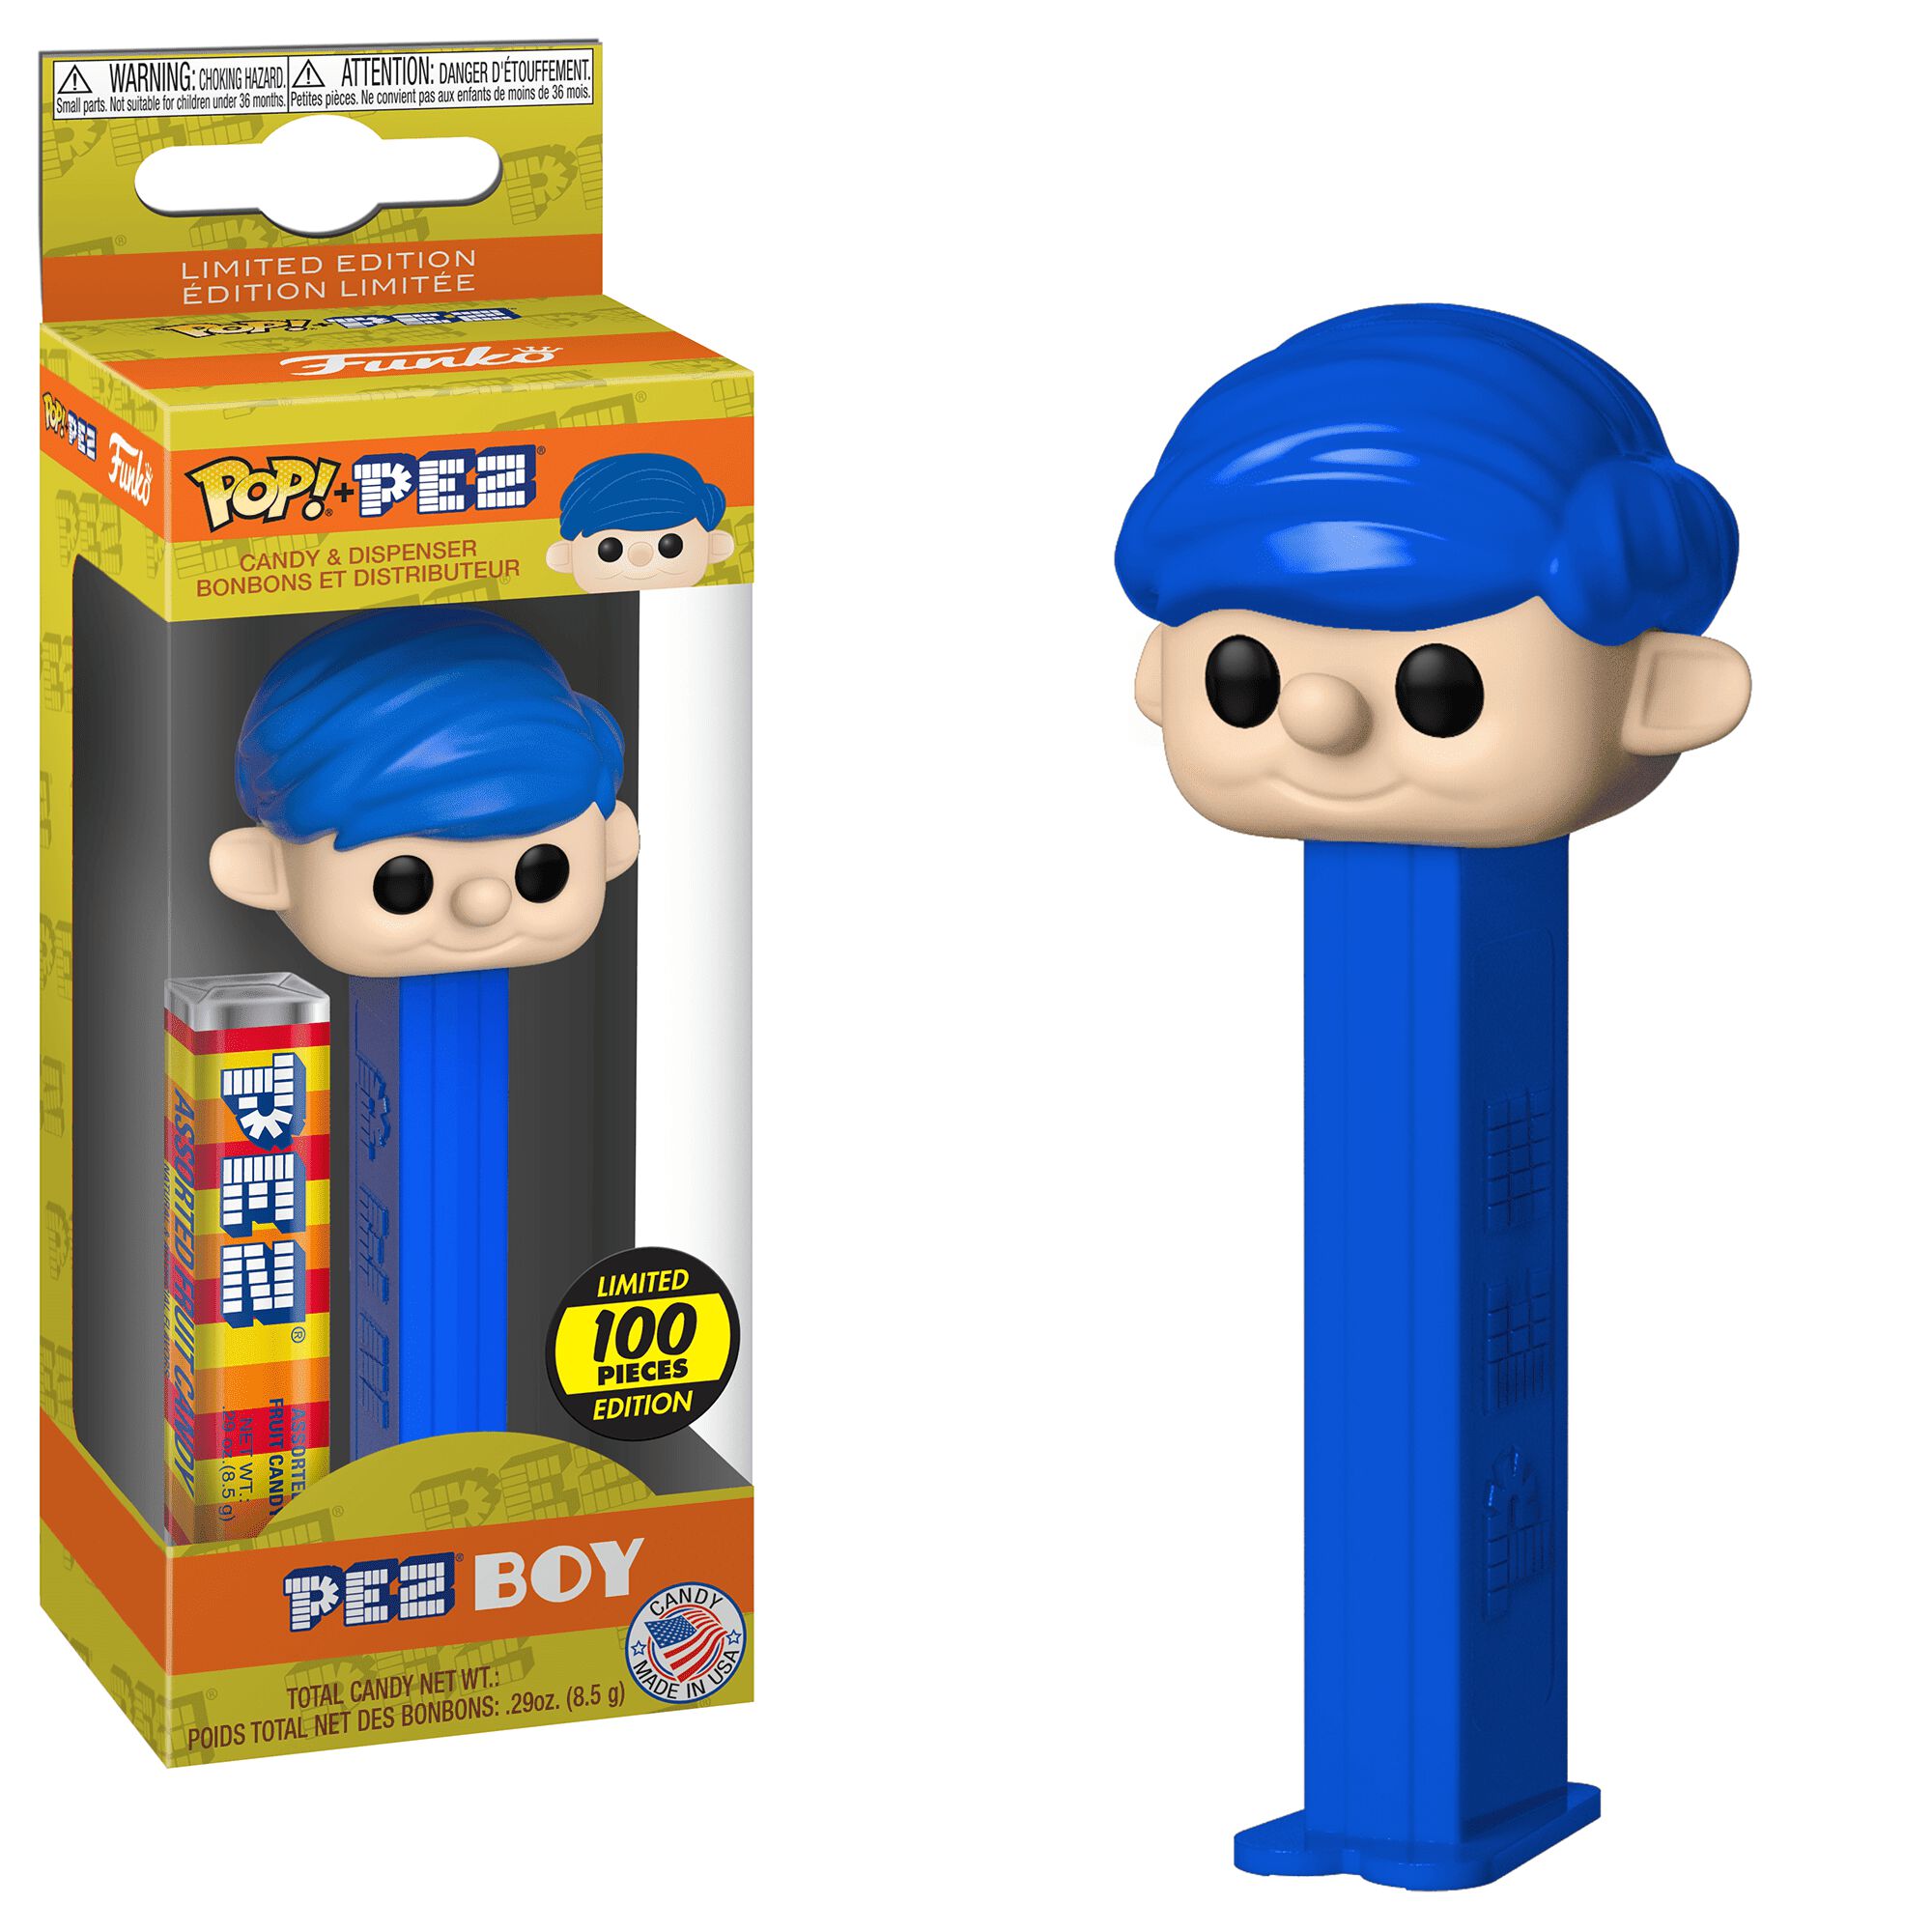 Introducing: Blue Hair Boy Pop! PEZ